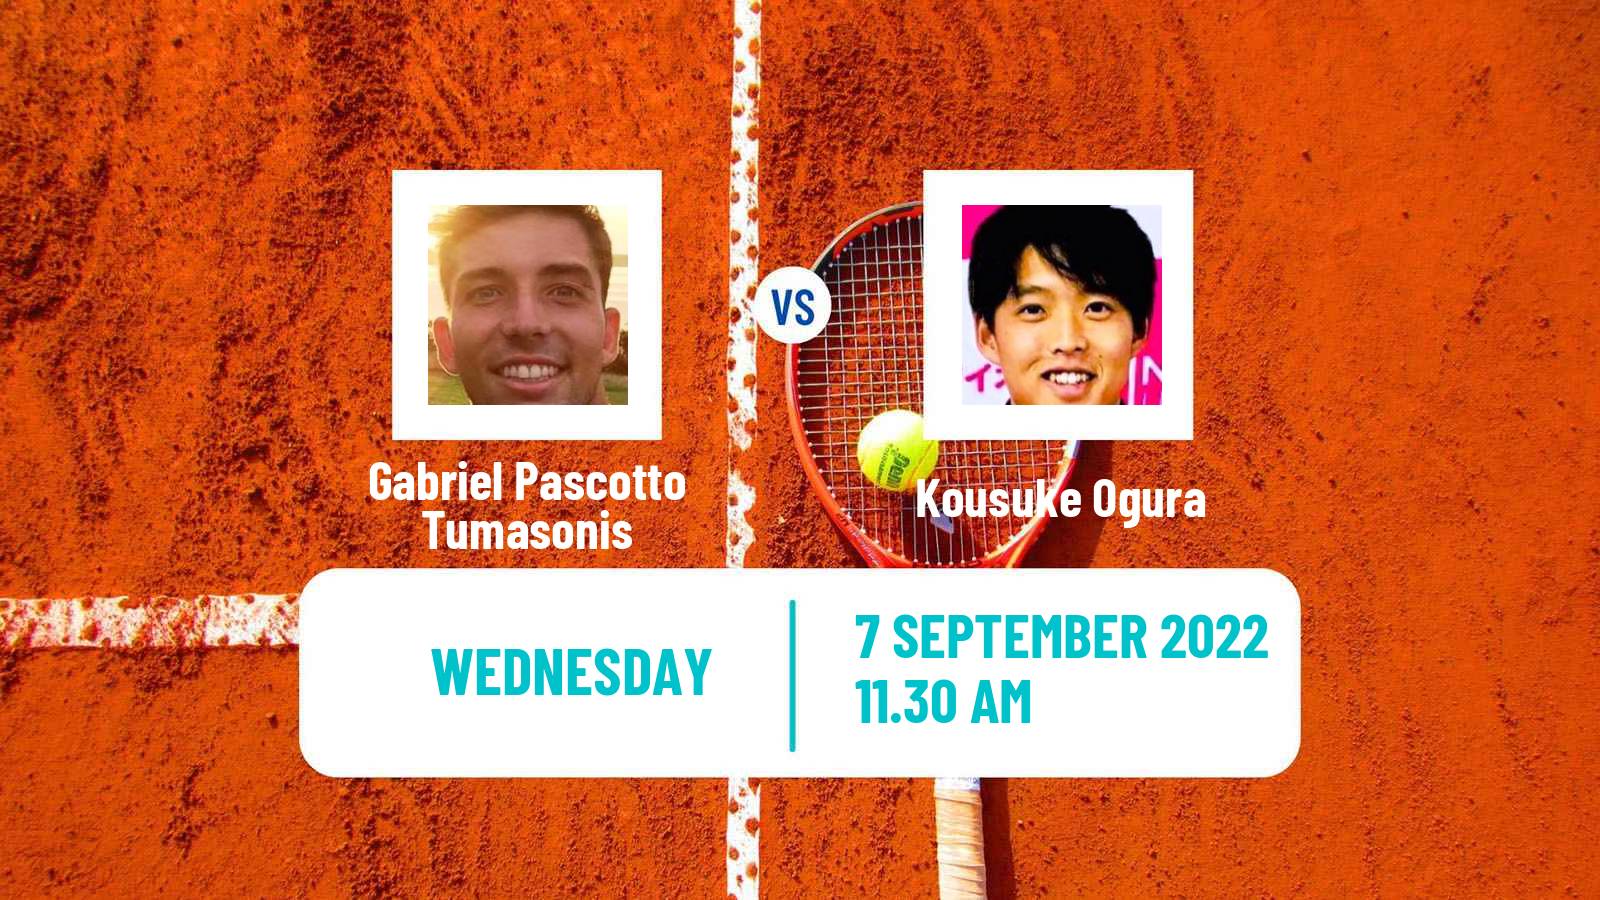 Tennis ITF Tournaments Gabriel Pascotto Tumasonis - Kousuke Ogura